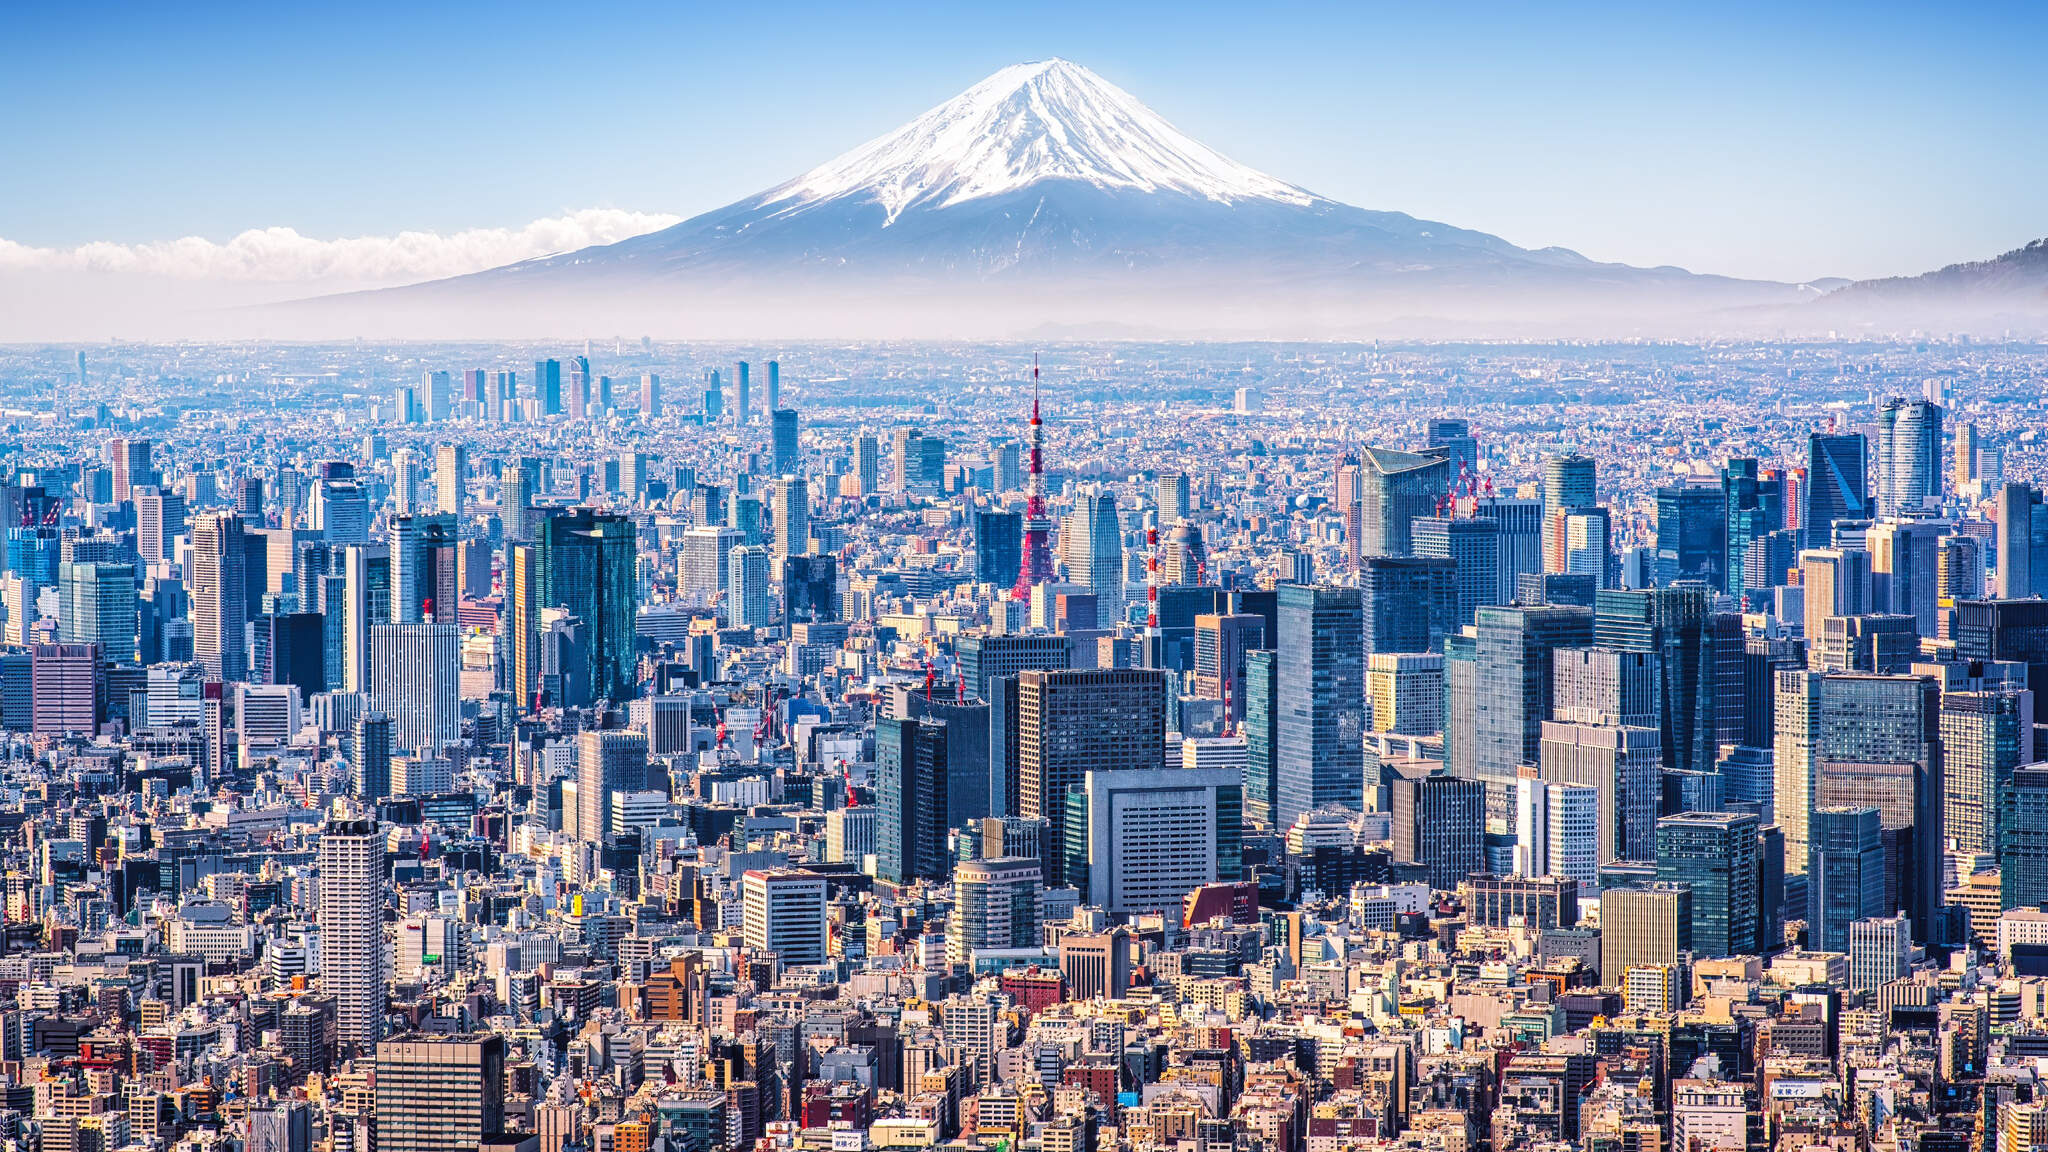 Tokio, la metrópolis económica al pie del monte Fuji.